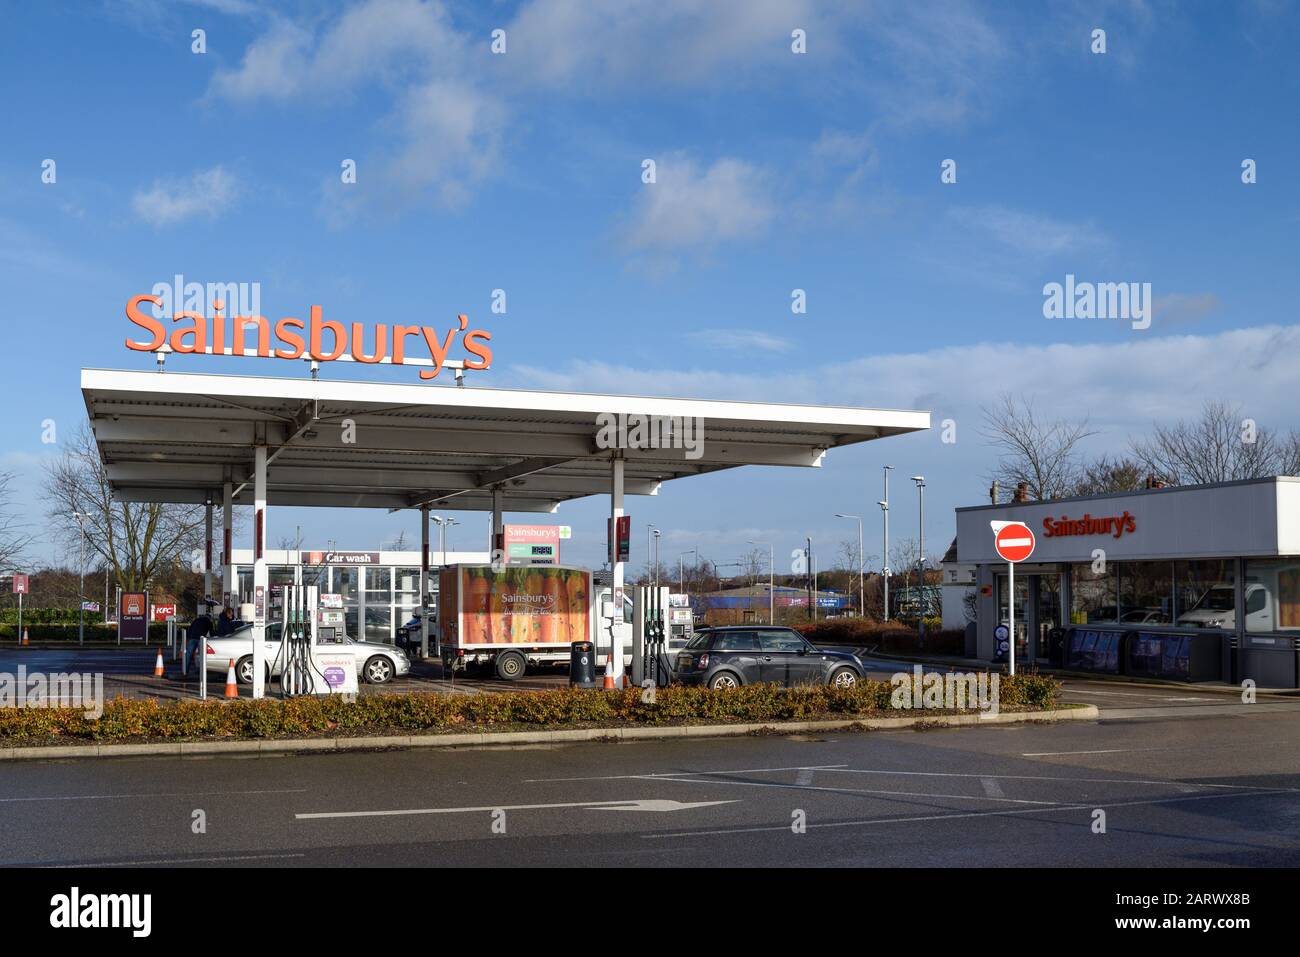 Sainsbury's Supermarkt, Fuel Station Mansfield, Royaume-Uni. Banque D'Images